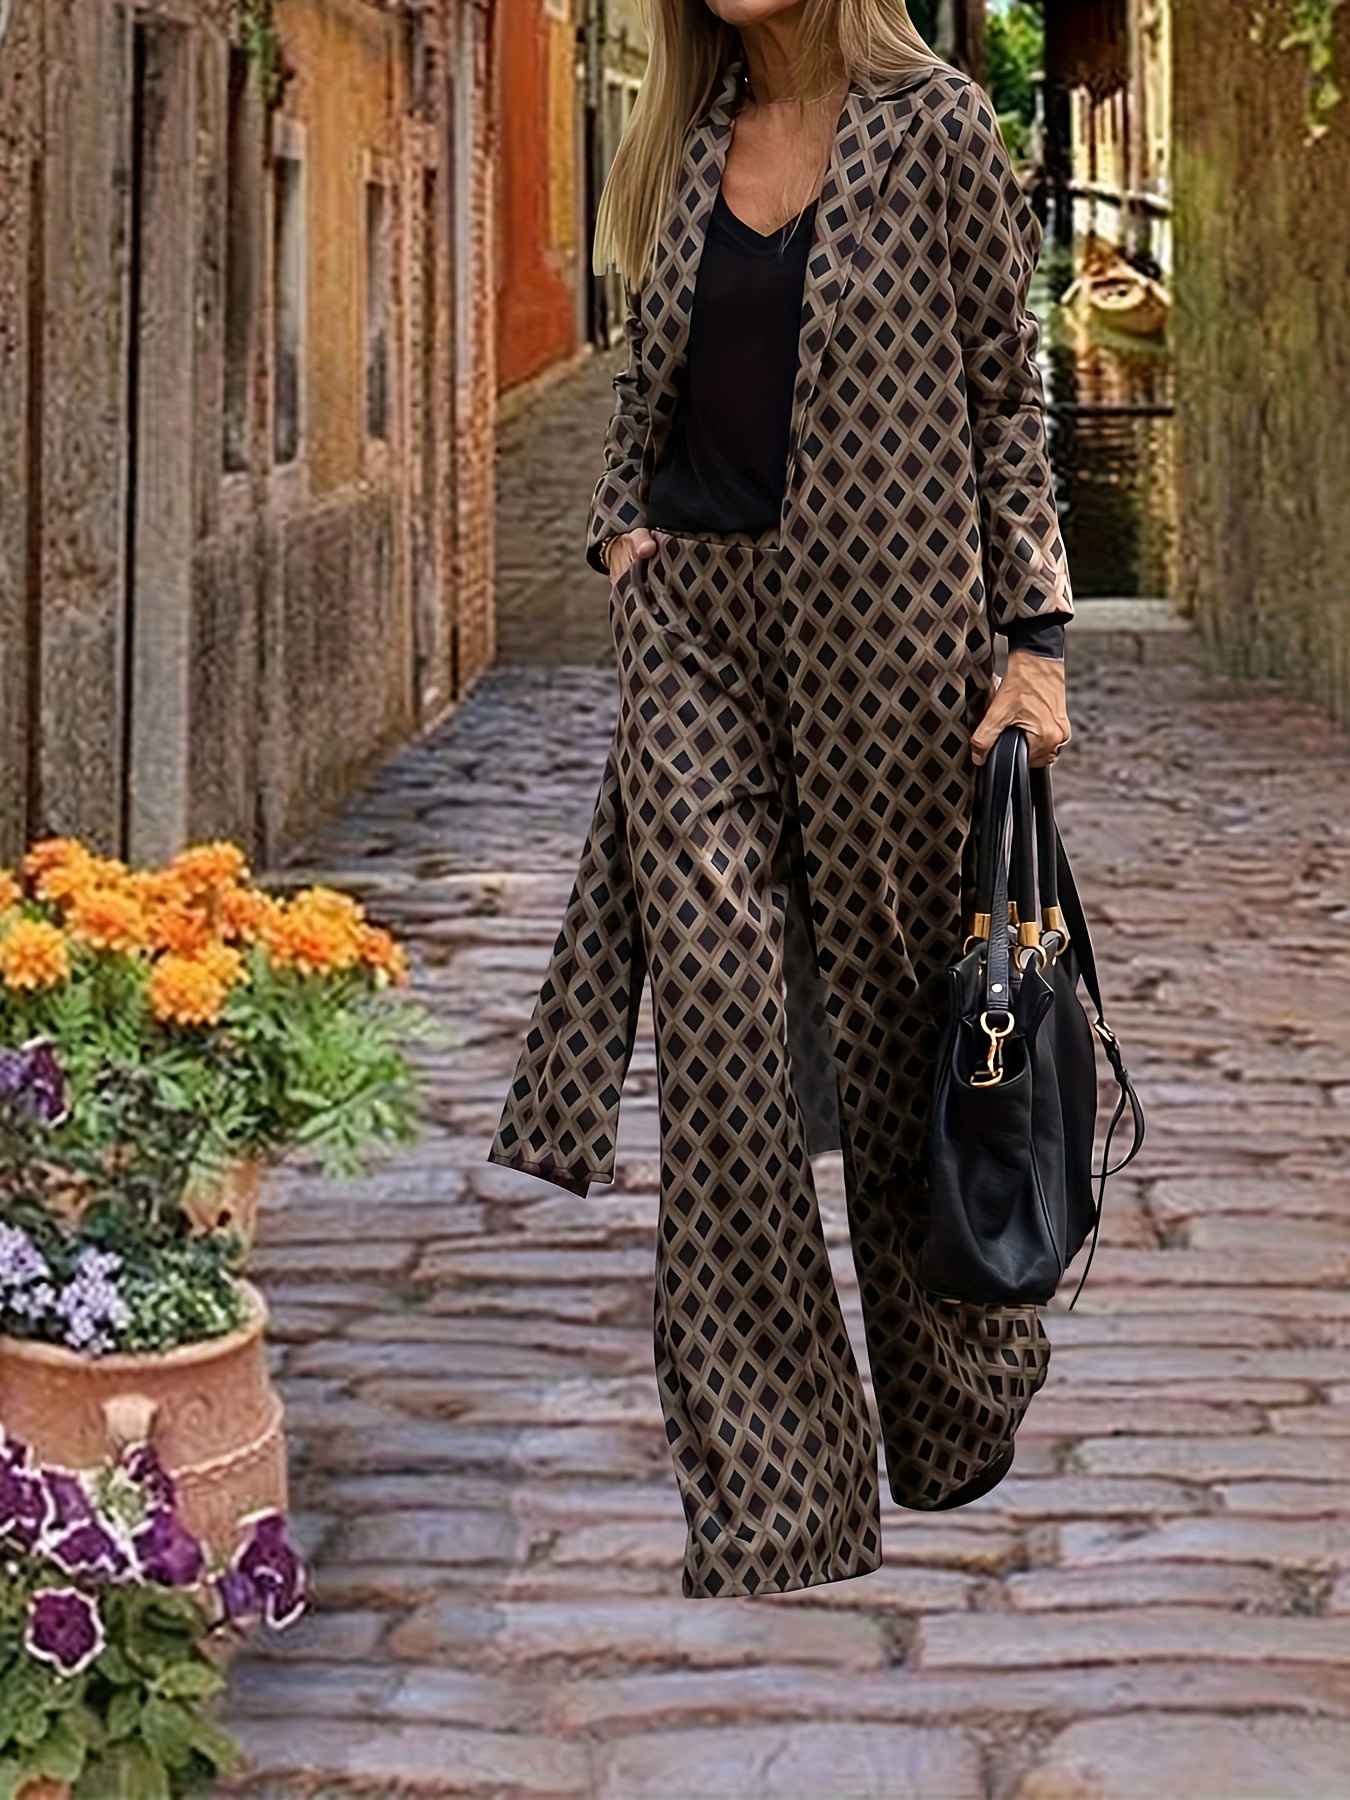 How To Wear A Plus Size Leopard Print Suit - Stylish Curves